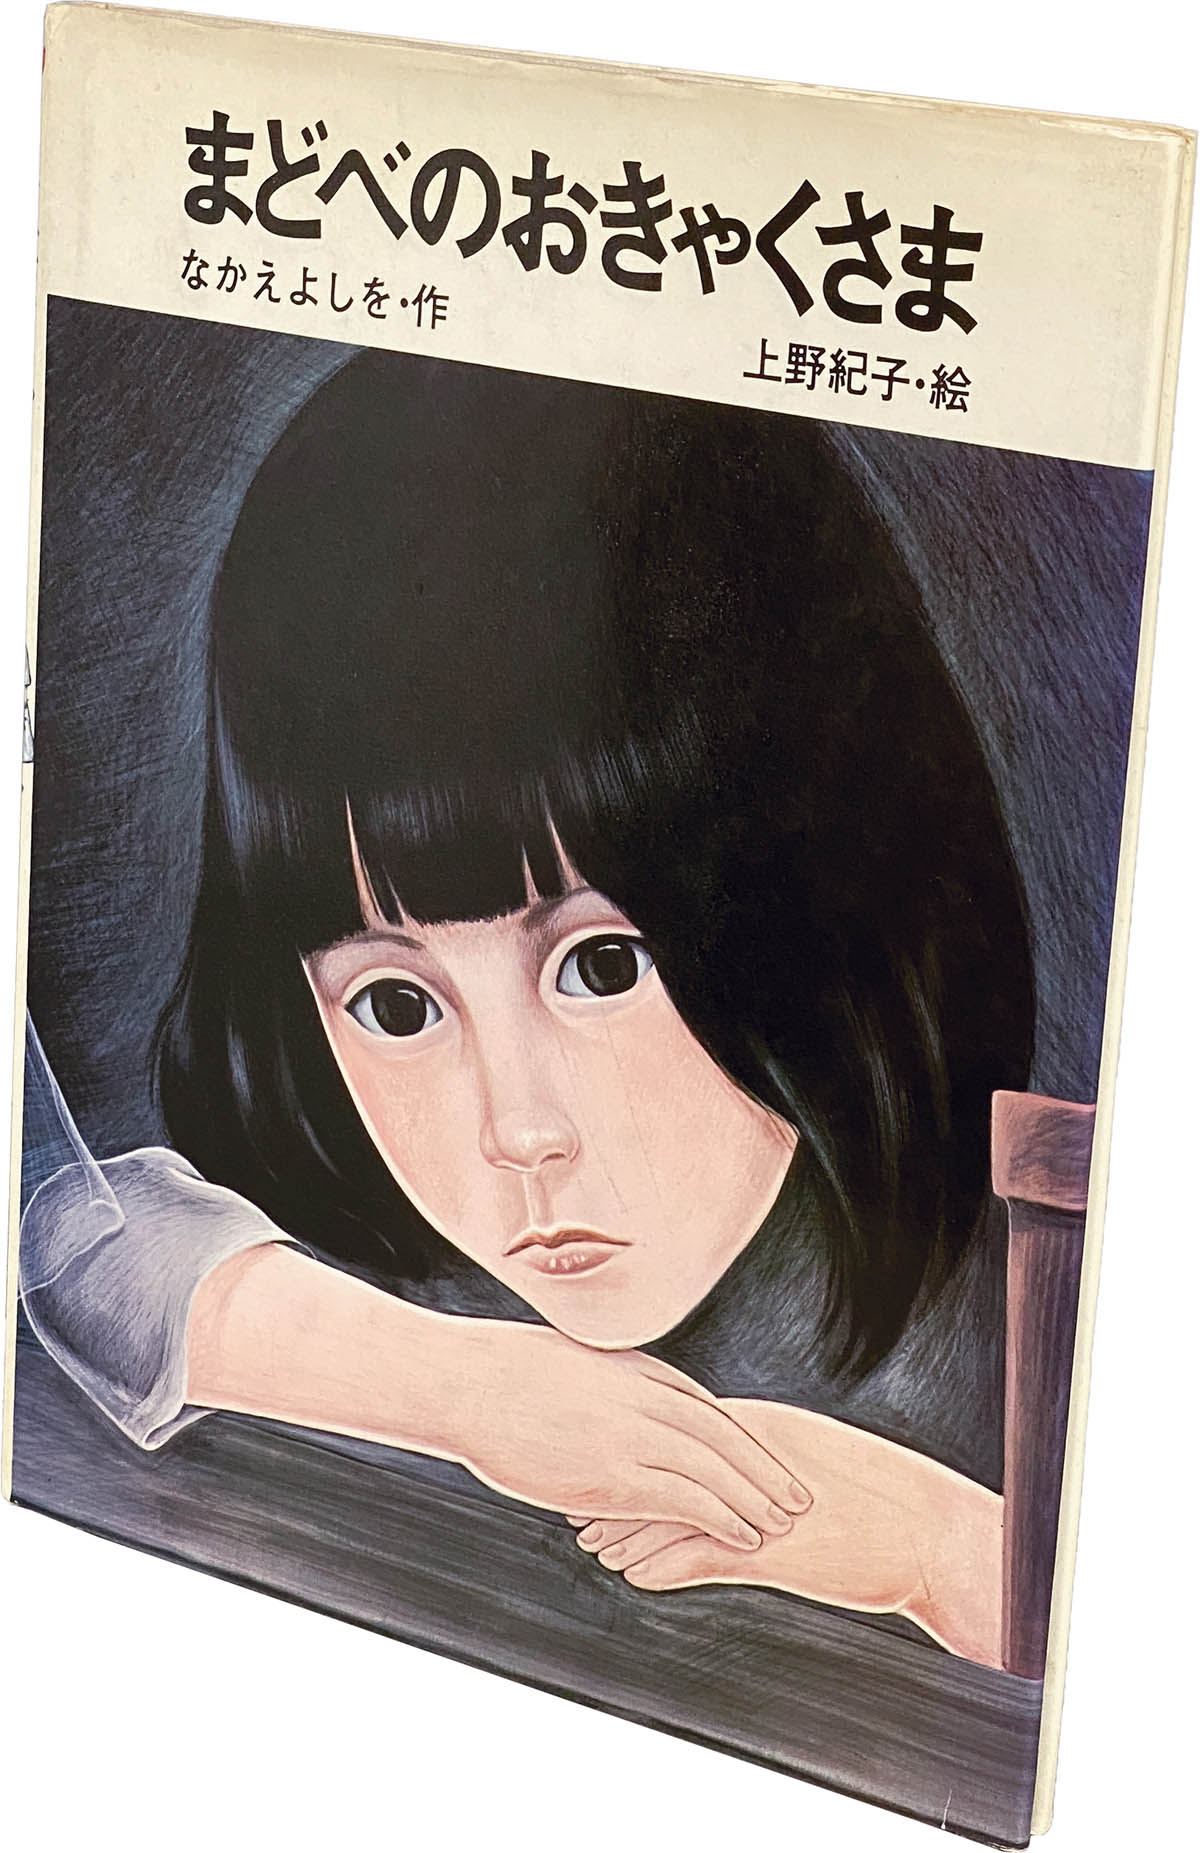 S17) 富士出版 熟女ひとり旅 新・三十路の女 久保千代子 赤石恭生 